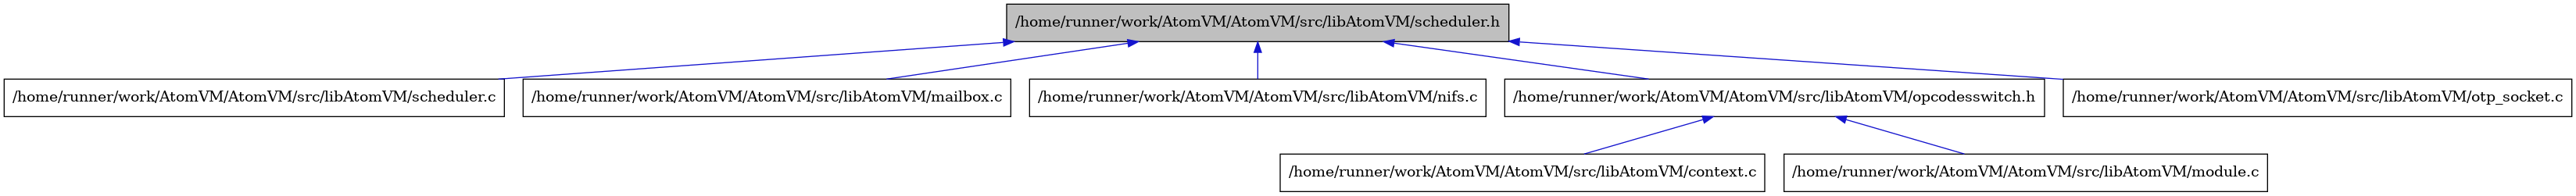 digraph {
    graph [bgcolor="#00000000"]
    node [shape=rectangle style=filled fillcolor="#FFFFFF" font=Helvetica padding=2]
    edge [color="#1414CE"]
    "8" [label="/home/runner/work/AtomVM/AtomVM/src/libAtomVM/scheduler.c" tooltip="/home/runner/work/AtomVM/AtomVM/src/libAtomVM/scheduler.c"]
    "1" [label="/home/runner/work/AtomVM/AtomVM/src/libAtomVM/scheduler.h" tooltip="/home/runner/work/AtomVM/AtomVM/src/libAtomVM/scheduler.h" fillcolor="#BFBFBF"]
    "5" [label="/home/runner/work/AtomVM/AtomVM/src/libAtomVM/context.c" tooltip="/home/runner/work/AtomVM/AtomVM/src/libAtomVM/context.c"]
    "2" [label="/home/runner/work/AtomVM/AtomVM/src/libAtomVM/mailbox.c" tooltip="/home/runner/work/AtomVM/AtomVM/src/libAtomVM/mailbox.c"]
    "6" [label="/home/runner/work/AtomVM/AtomVM/src/libAtomVM/module.c" tooltip="/home/runner/work/AtomVM/AtomVM/src/libAtomVM/module.c"]
    "3" [label="/home/runner/work/AtomVM/AtomVM/src/libAtomVM/nifs.c" tooltip="/home/runner/work/AtomVM/AtomVM/src/libAtomVM/nifs.c"]
    "4" [label="/home/runner/work/AtomVM/AtomVM/src/libAtomVM/opcodesswitch.h" tooltip="/home/runner/work/AtomVM/AtomVM/src/libAtomVM/opcodesswitch.h"]
    "7" [label="/home/runner/work/AtomVM/AtomVM/src/libAtomVM/otp_socket.c" tooltip="/home/runner/work/AtomVM/AtomVM/src/libAtomVM/otp_socket.c"]
    "1" -> "2" [dir=back tooltip="include"]
    "1" -> "3" [dir=back tooltip="include"]
    "1" -> "4" [dir=back tooltip="include"]
    "1" -> "7" [dir=back tooltip="include"]
    "1" -> "8" [dir=back tooltip="include"]
    "4" -> "5" [dir=back tooltip="include"]
    "4" -> "6" [dir=back tooltip="include"]
}